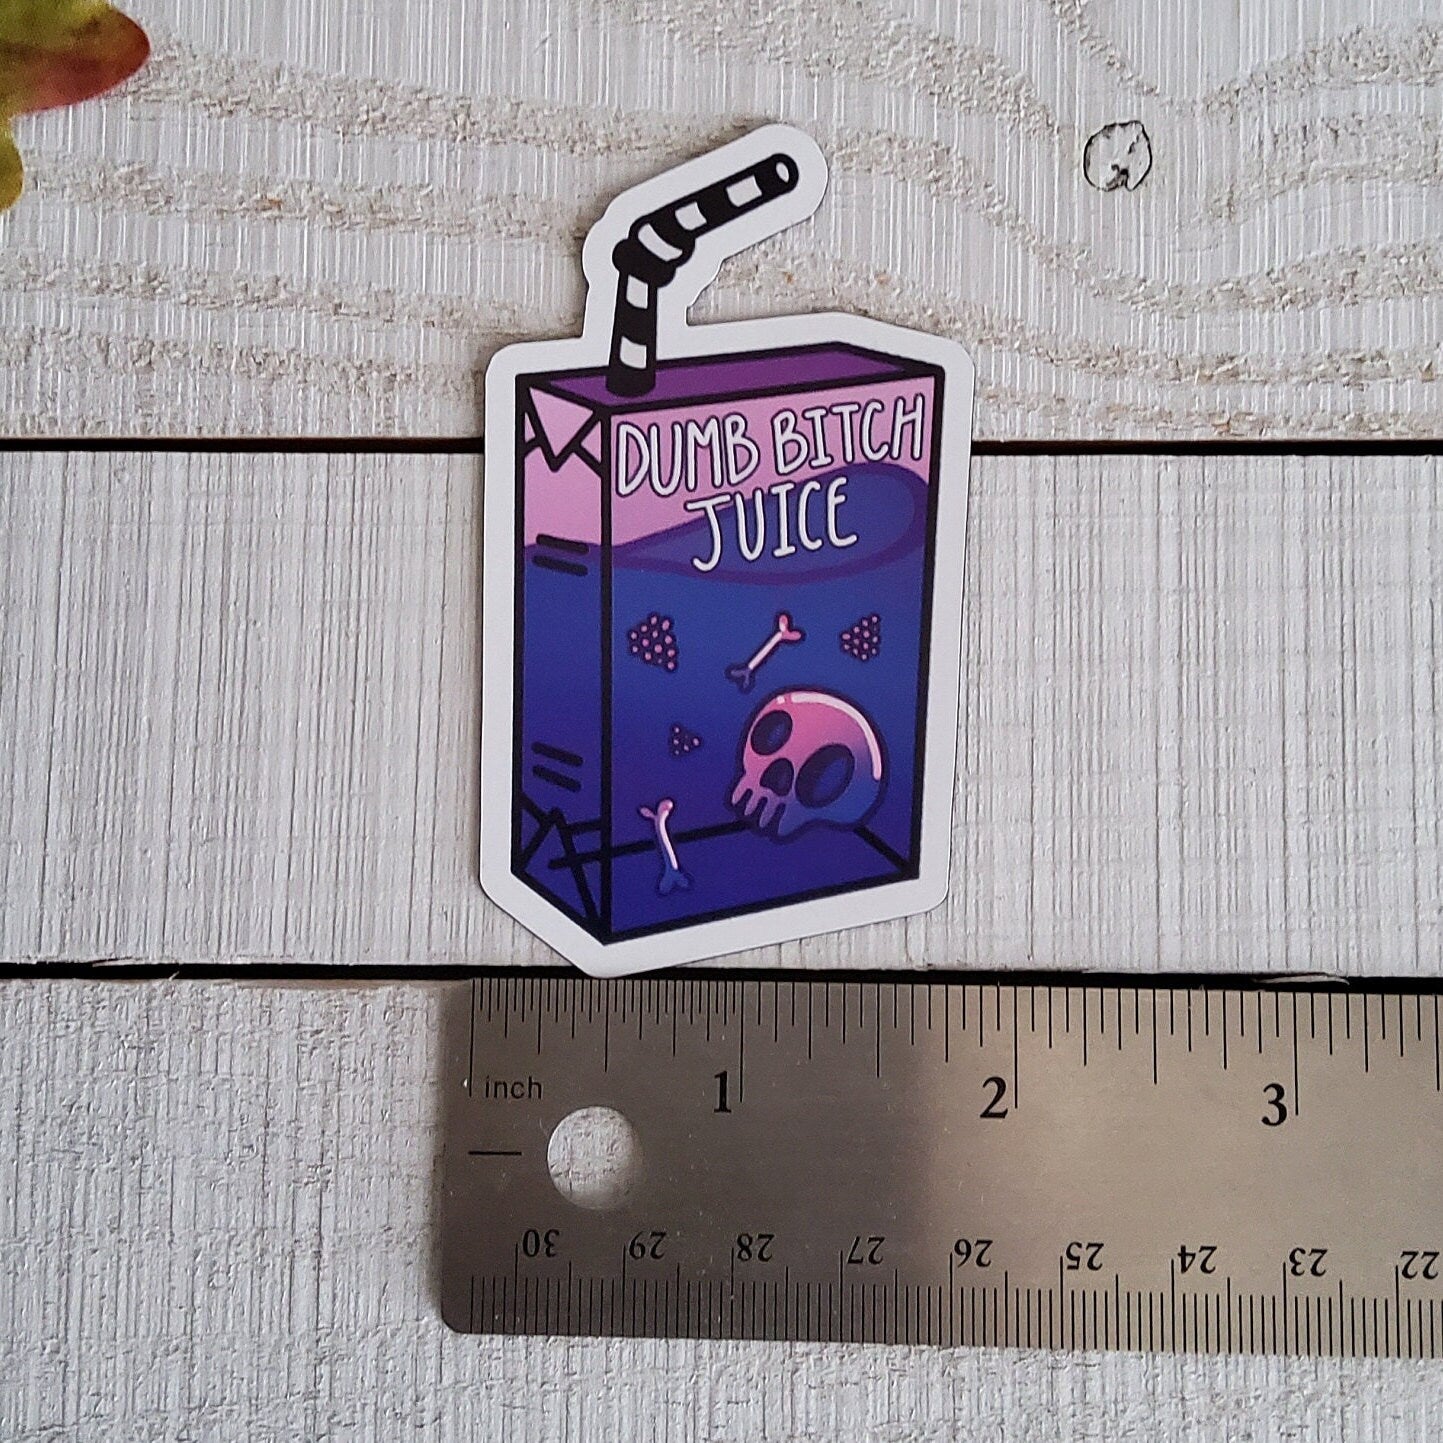 MAGNET: Dumb Bitch Juice Box Magnet , Dumb Bitch Juice Magnet , Juice Box Magnet , Purple Dumb Bitch Juice Box Magnet , Purple Magnet